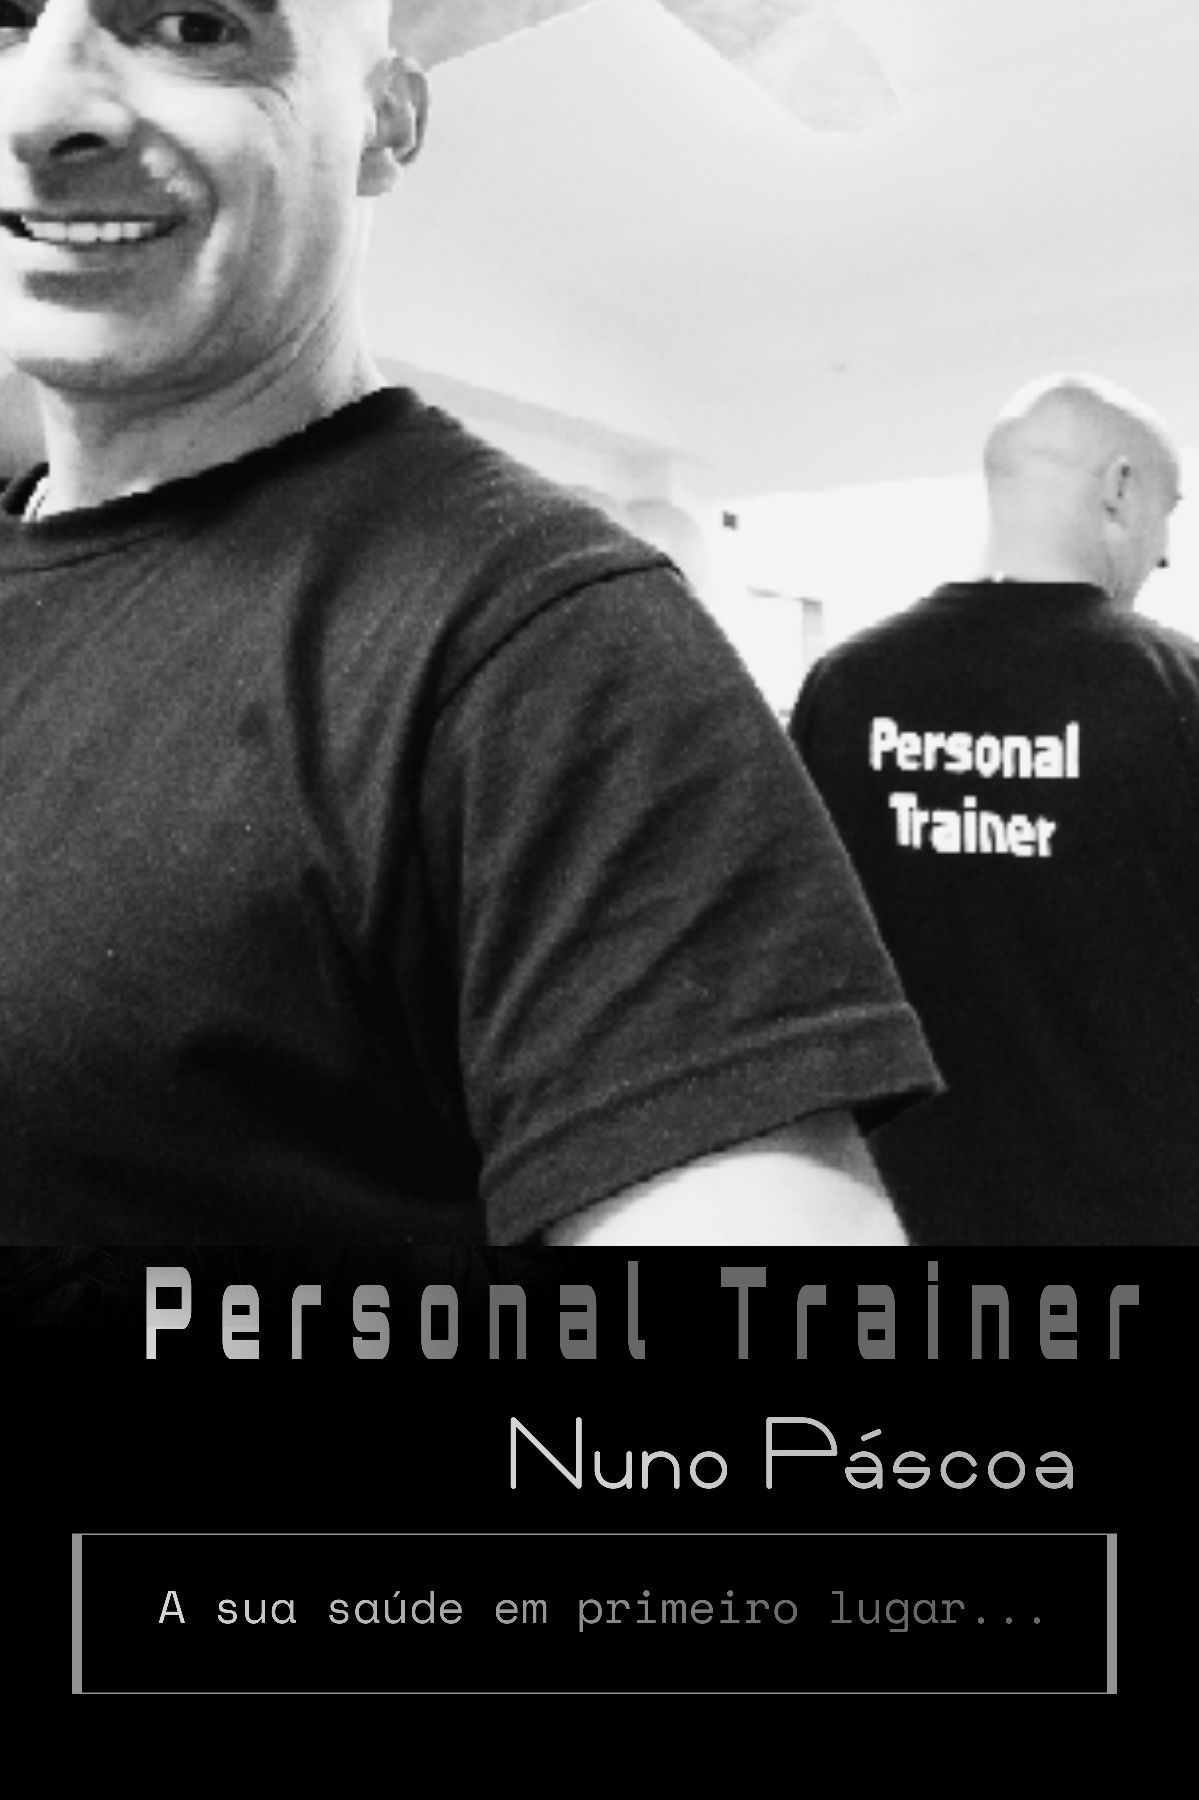 Personal trainers - Fitness Nuno Páscoa.